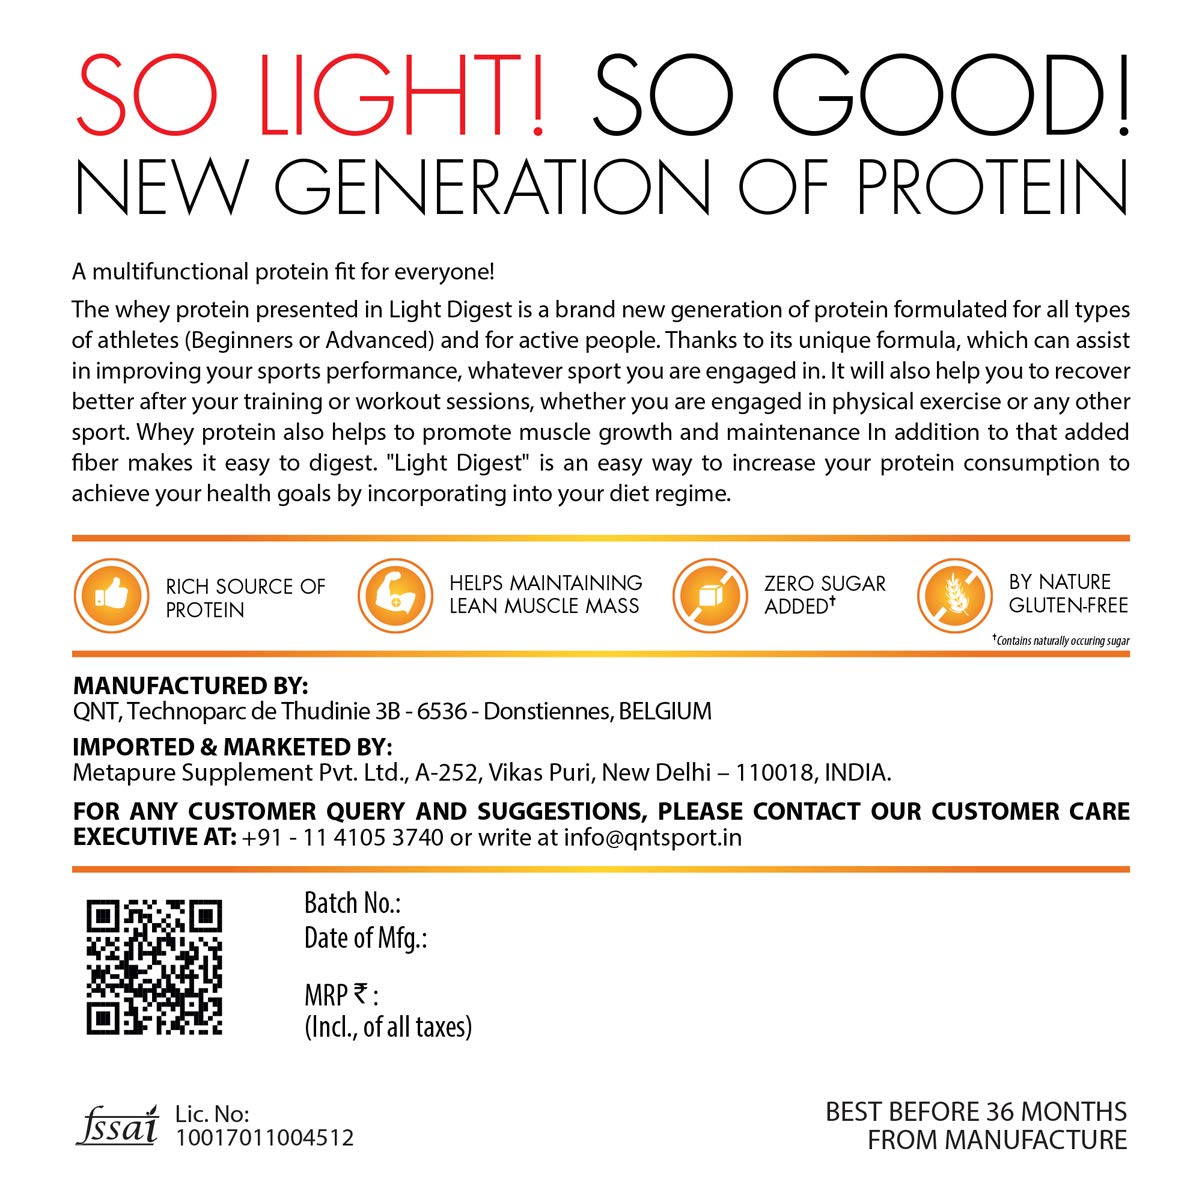 QNT Light Digest Whey Protein 908g